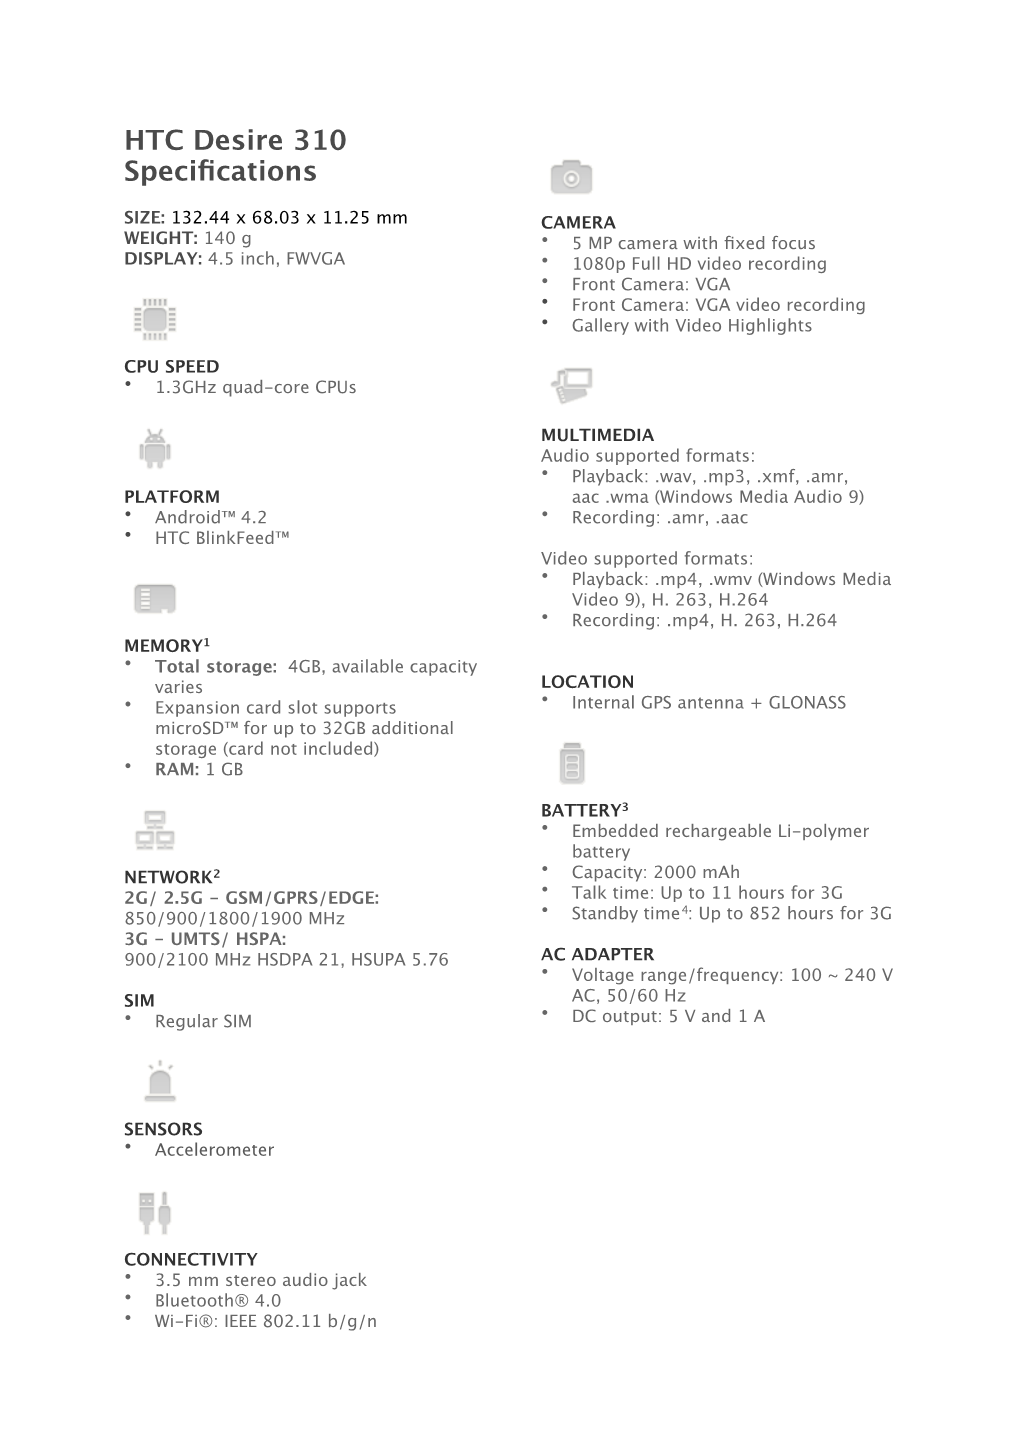 HTC Desire 310 Spec Sheet.Pages